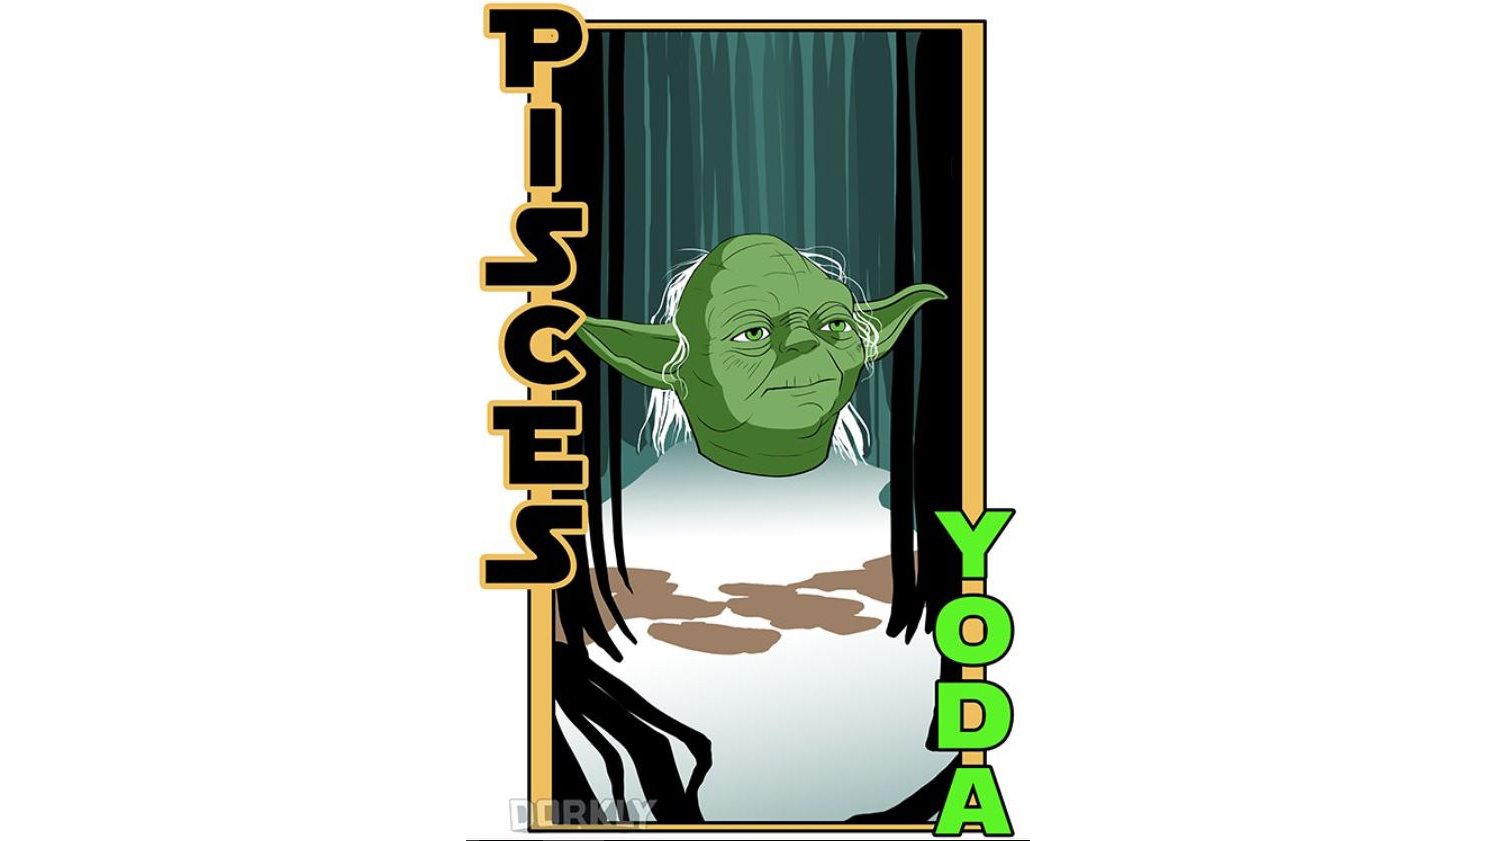 Piscis – Yoda